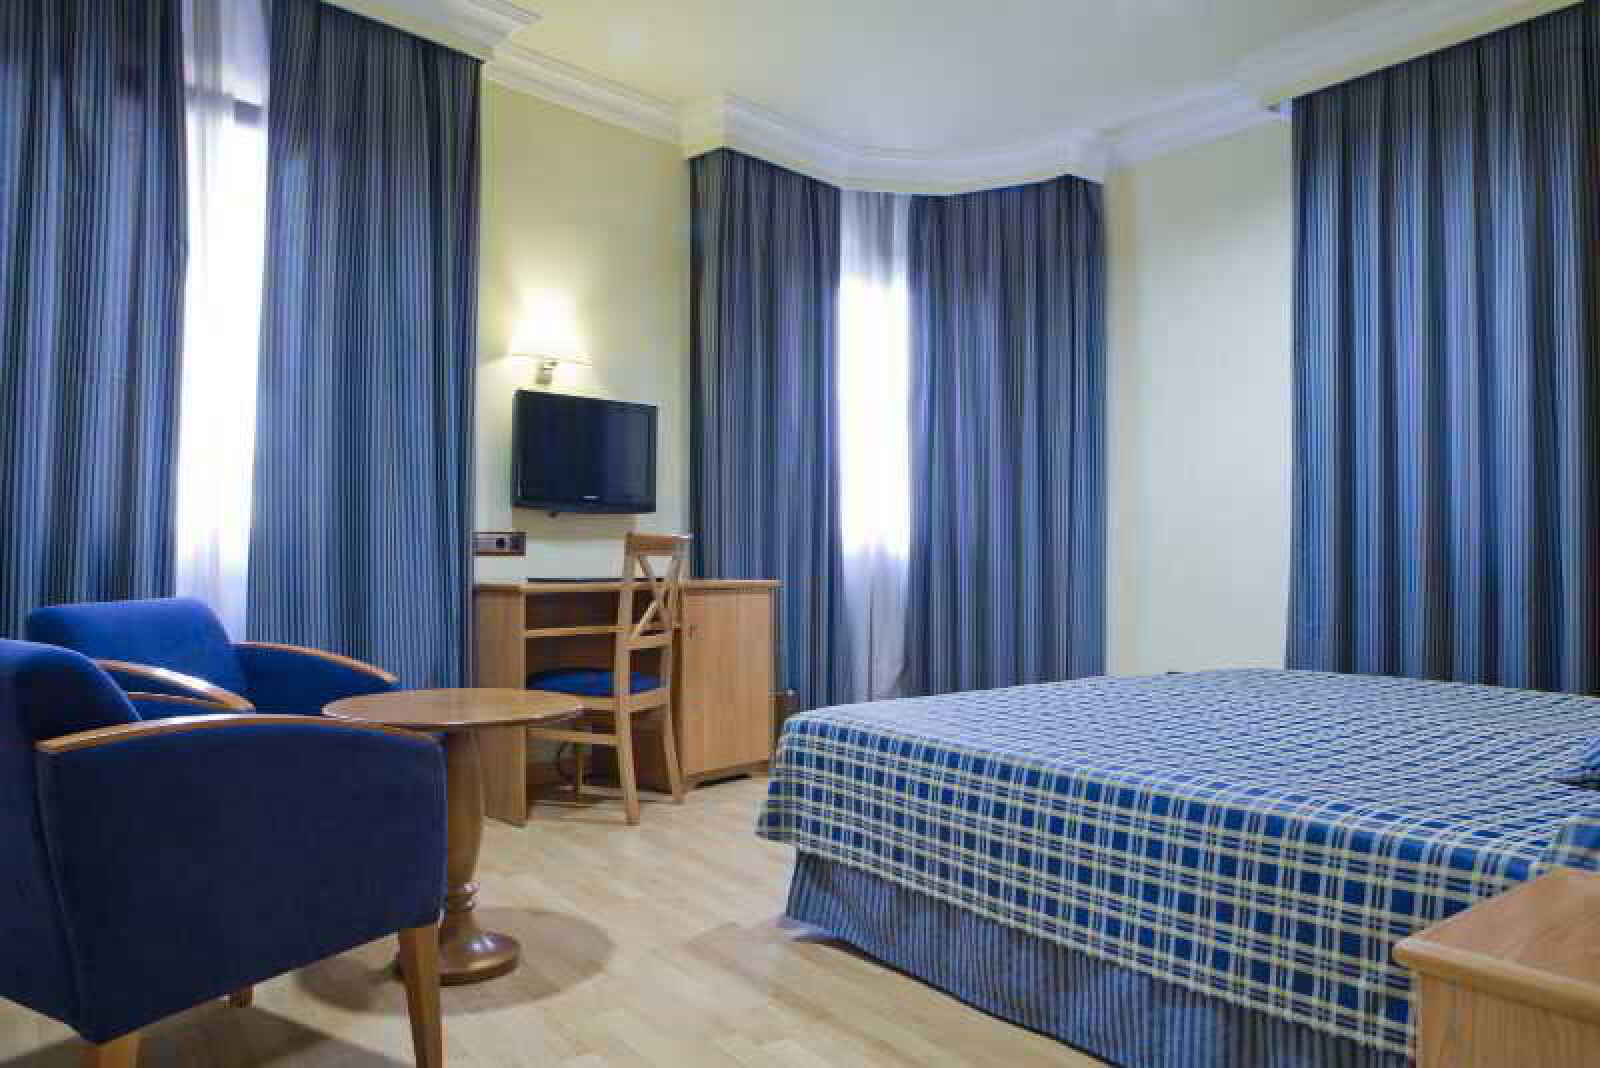 Chambre double, Hôtel Il Castillas, Madrid, Espagne